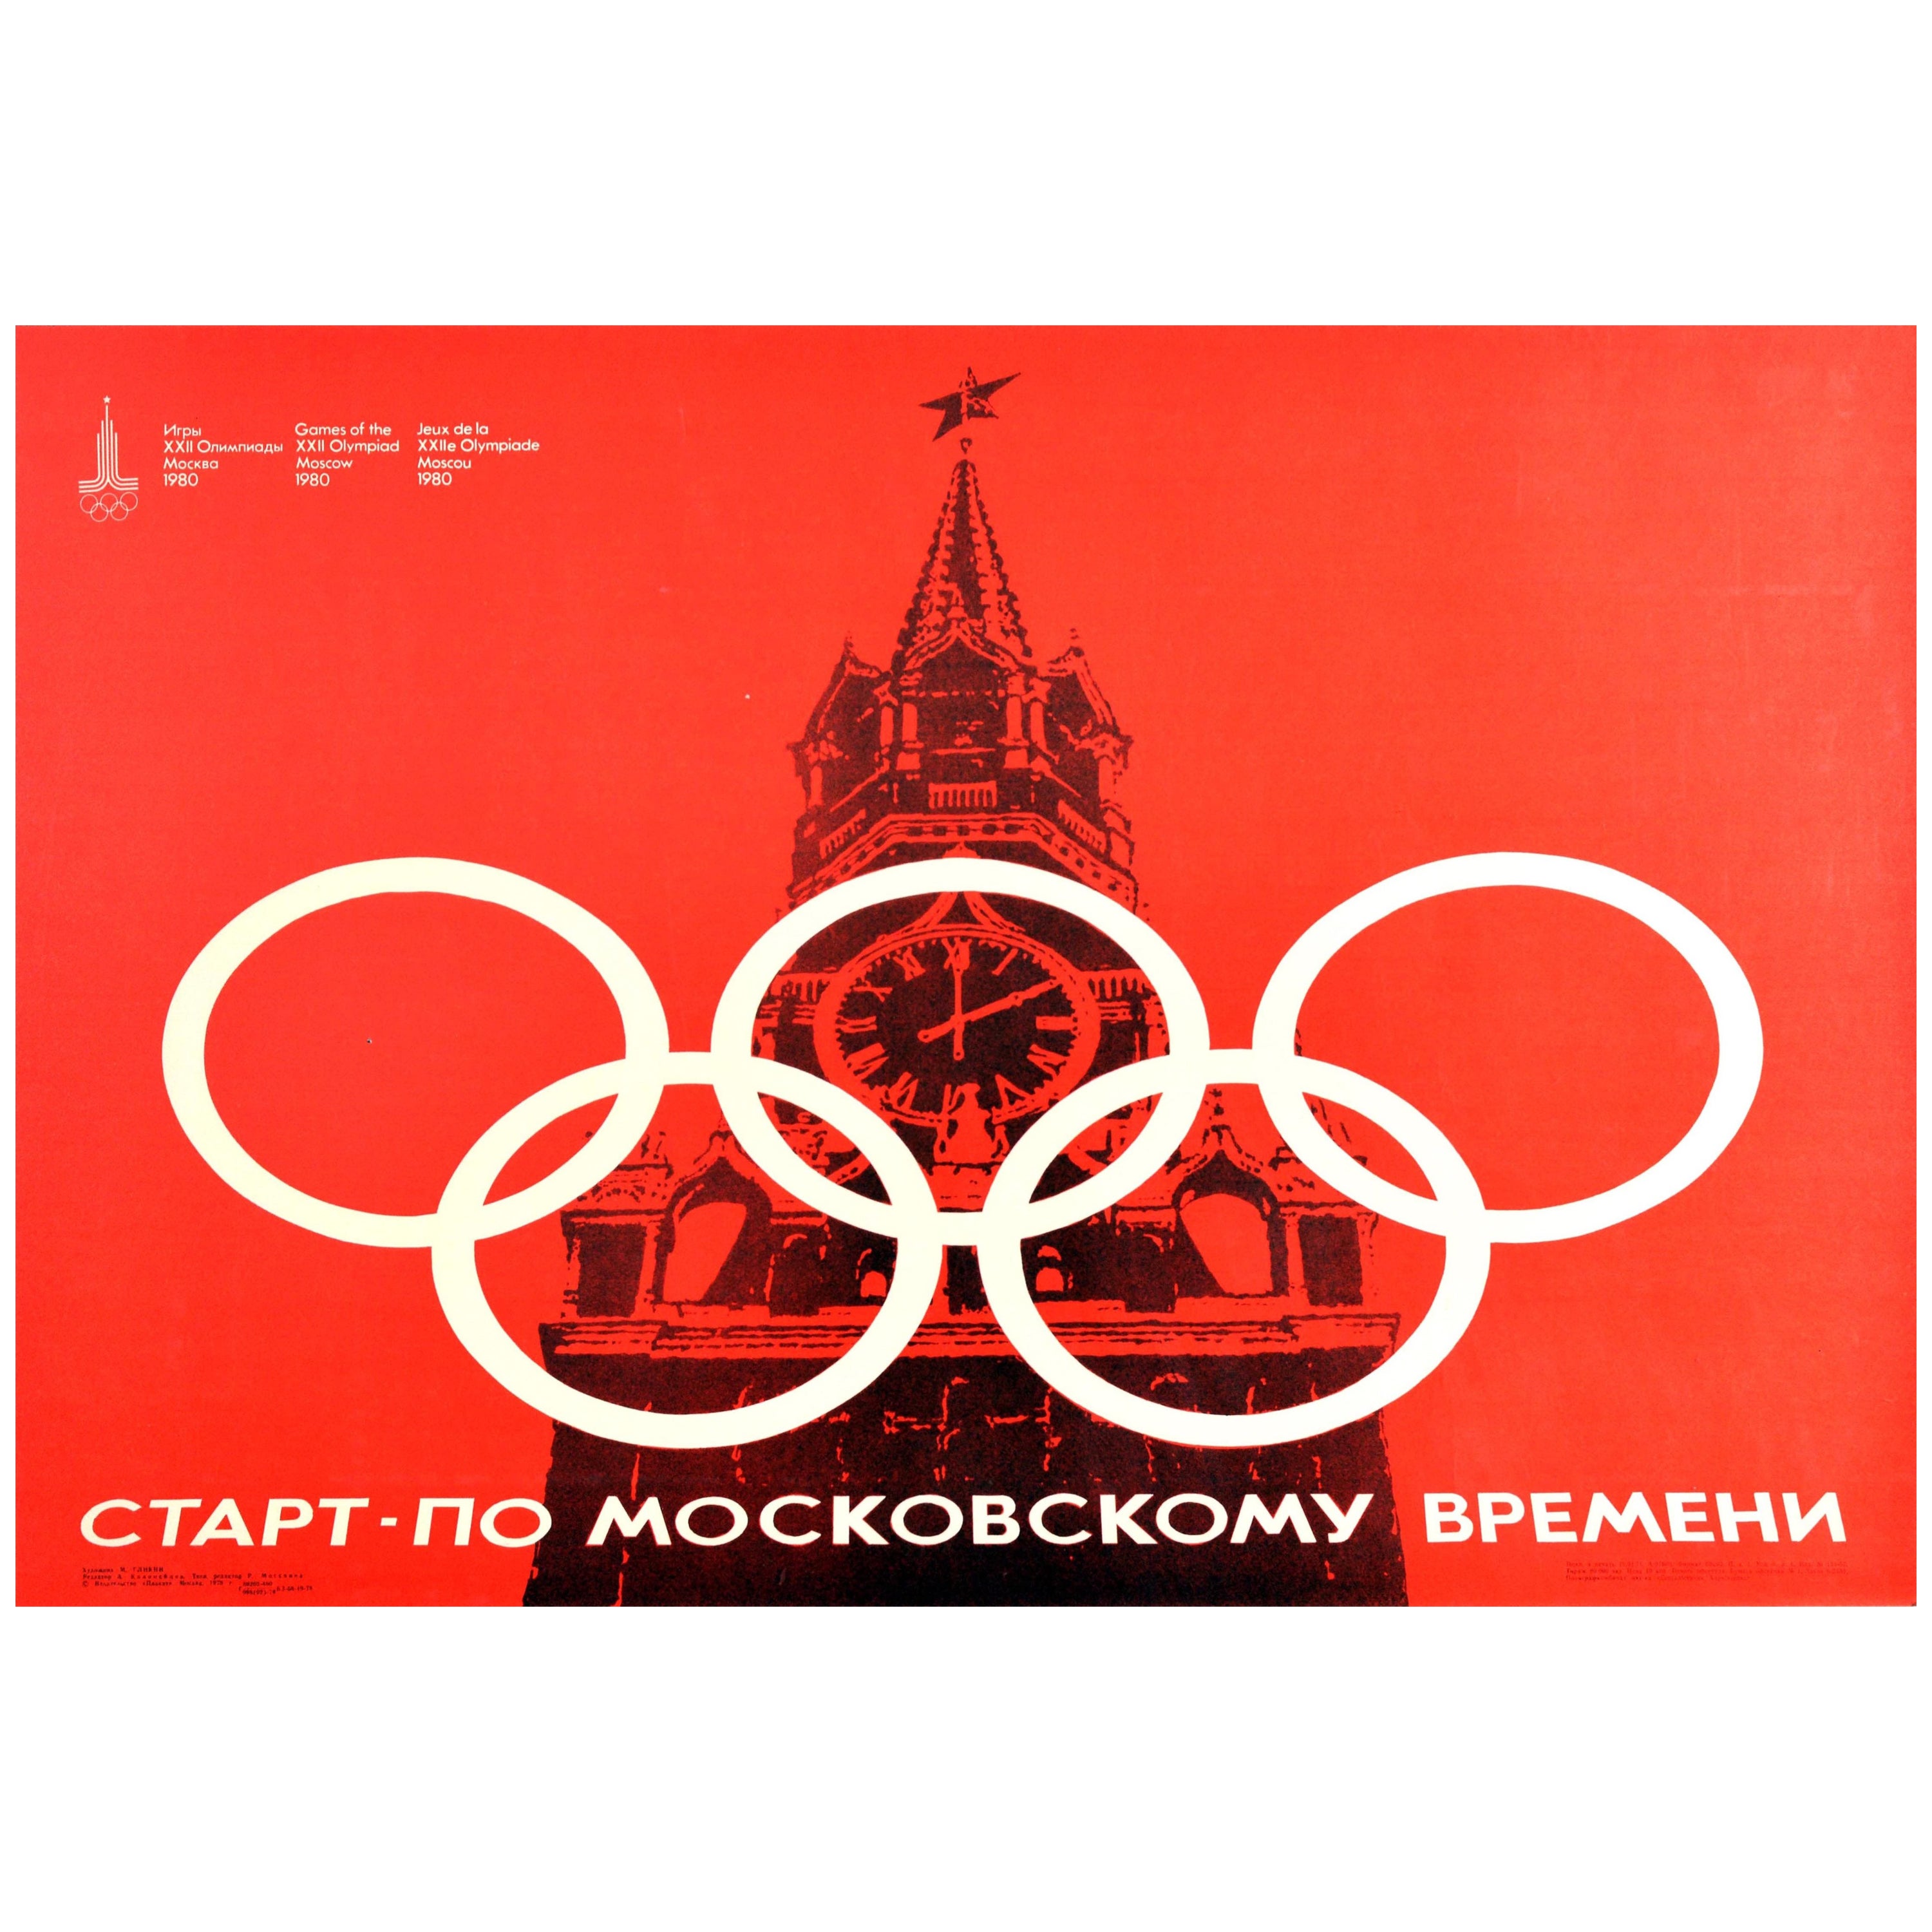 Original Vintage Poster 1980 Olympic Games Start On Moscow Time Kremlin Clock